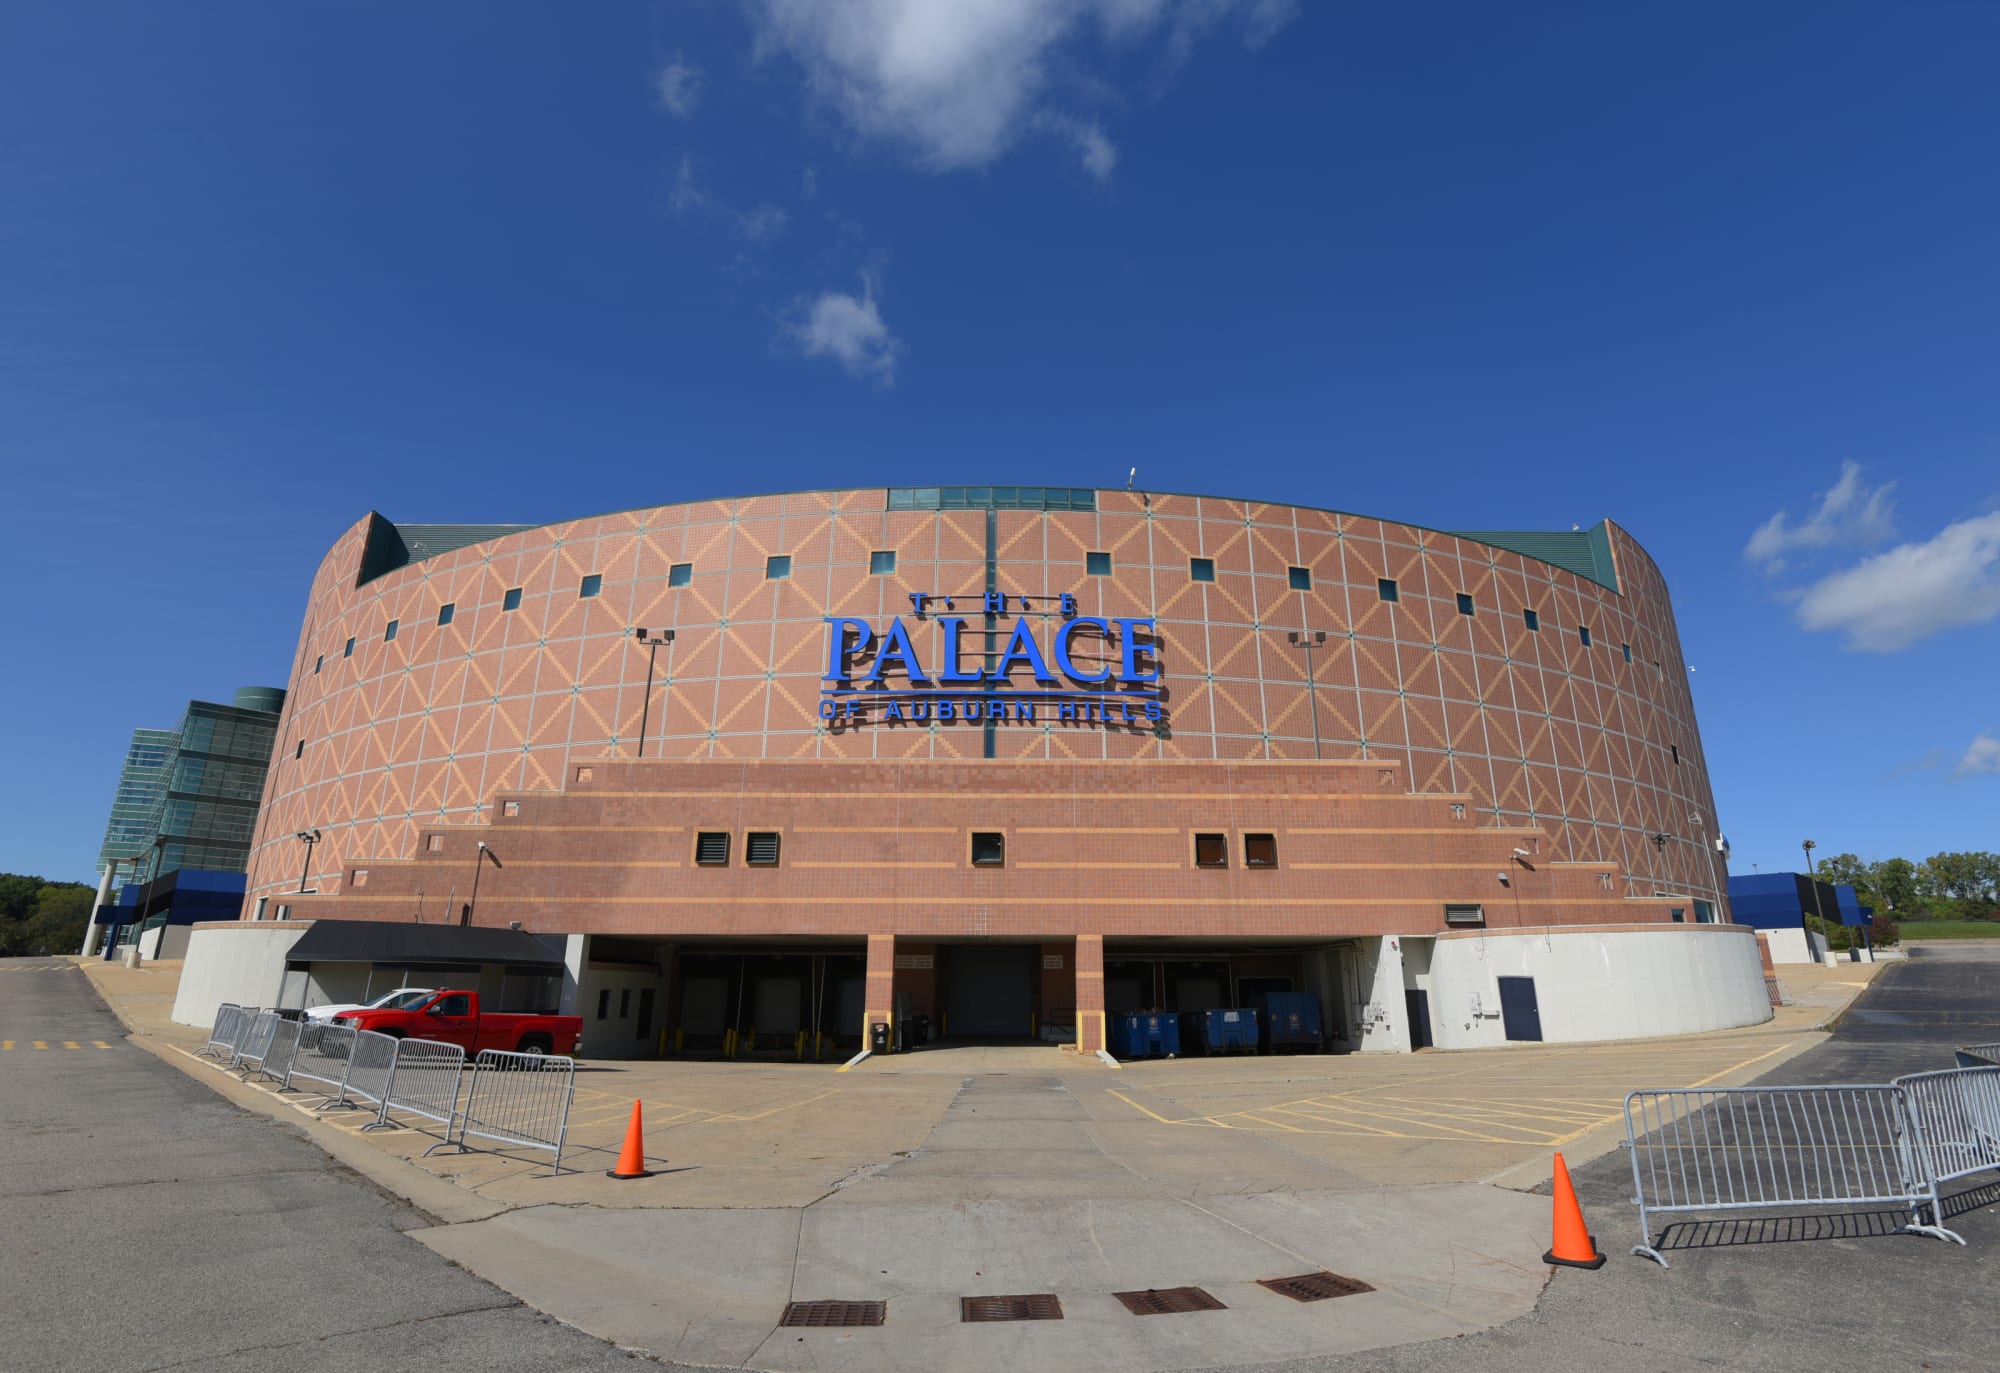 Palace intrigue -- Pistons may demolish old arena - ESPN